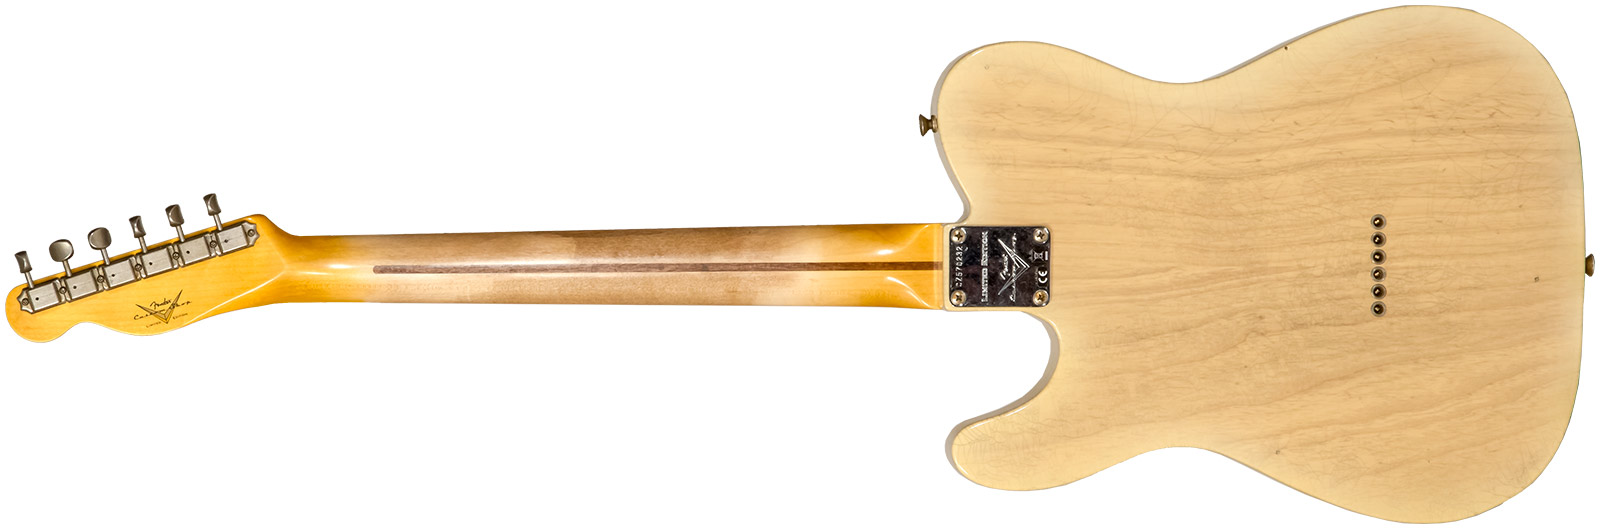 Fender Custom Shop Tele 1955 2s Ht Mn #cz570232 - Journeyman Relic Natural Blonde - Tel shape electric guitar - Variation 1